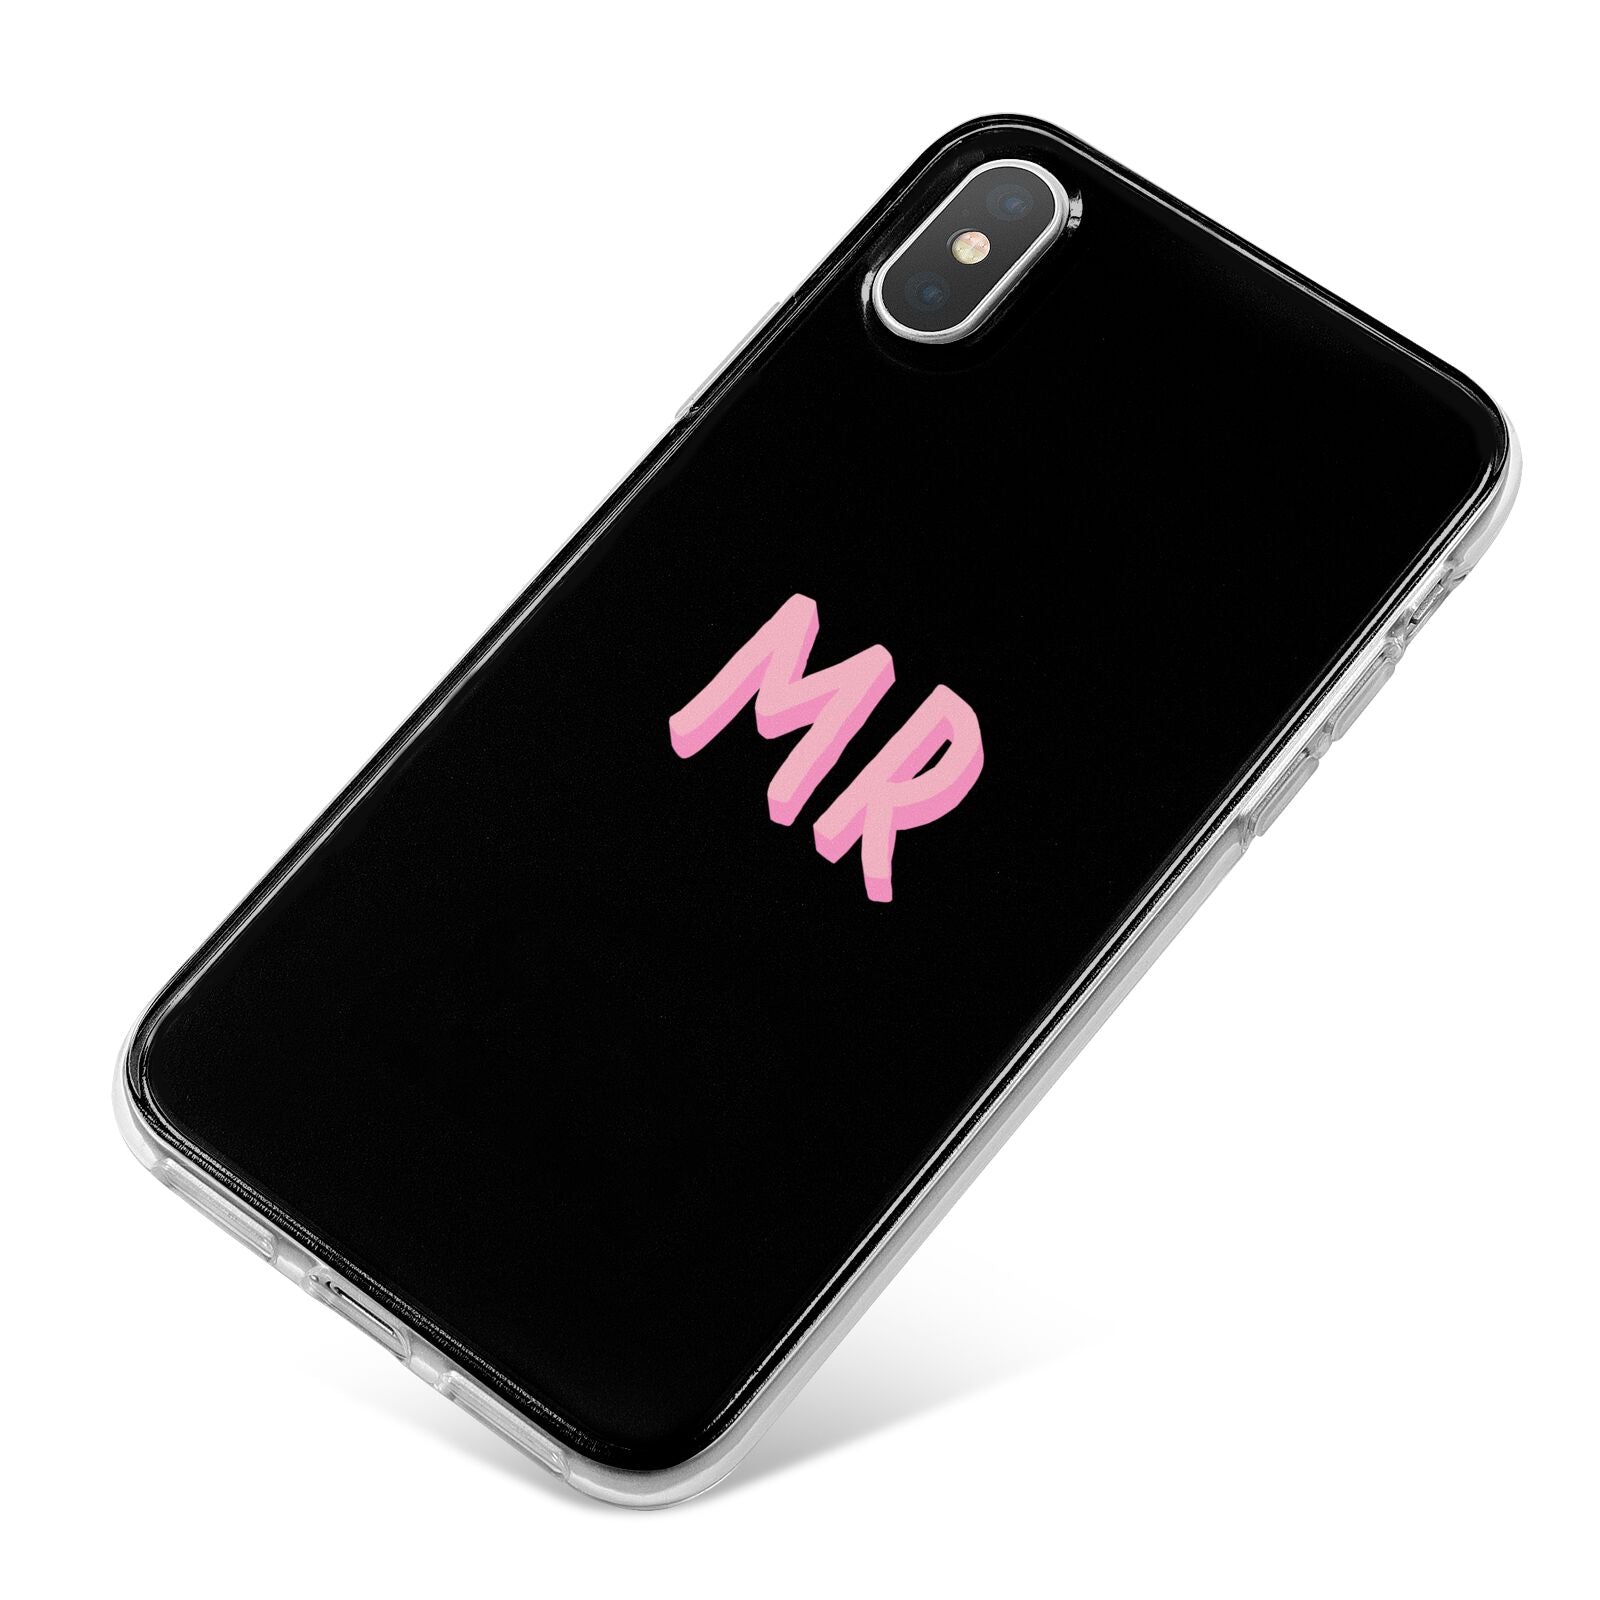 Mr iPhone X Bumper Case on Silver iPhone